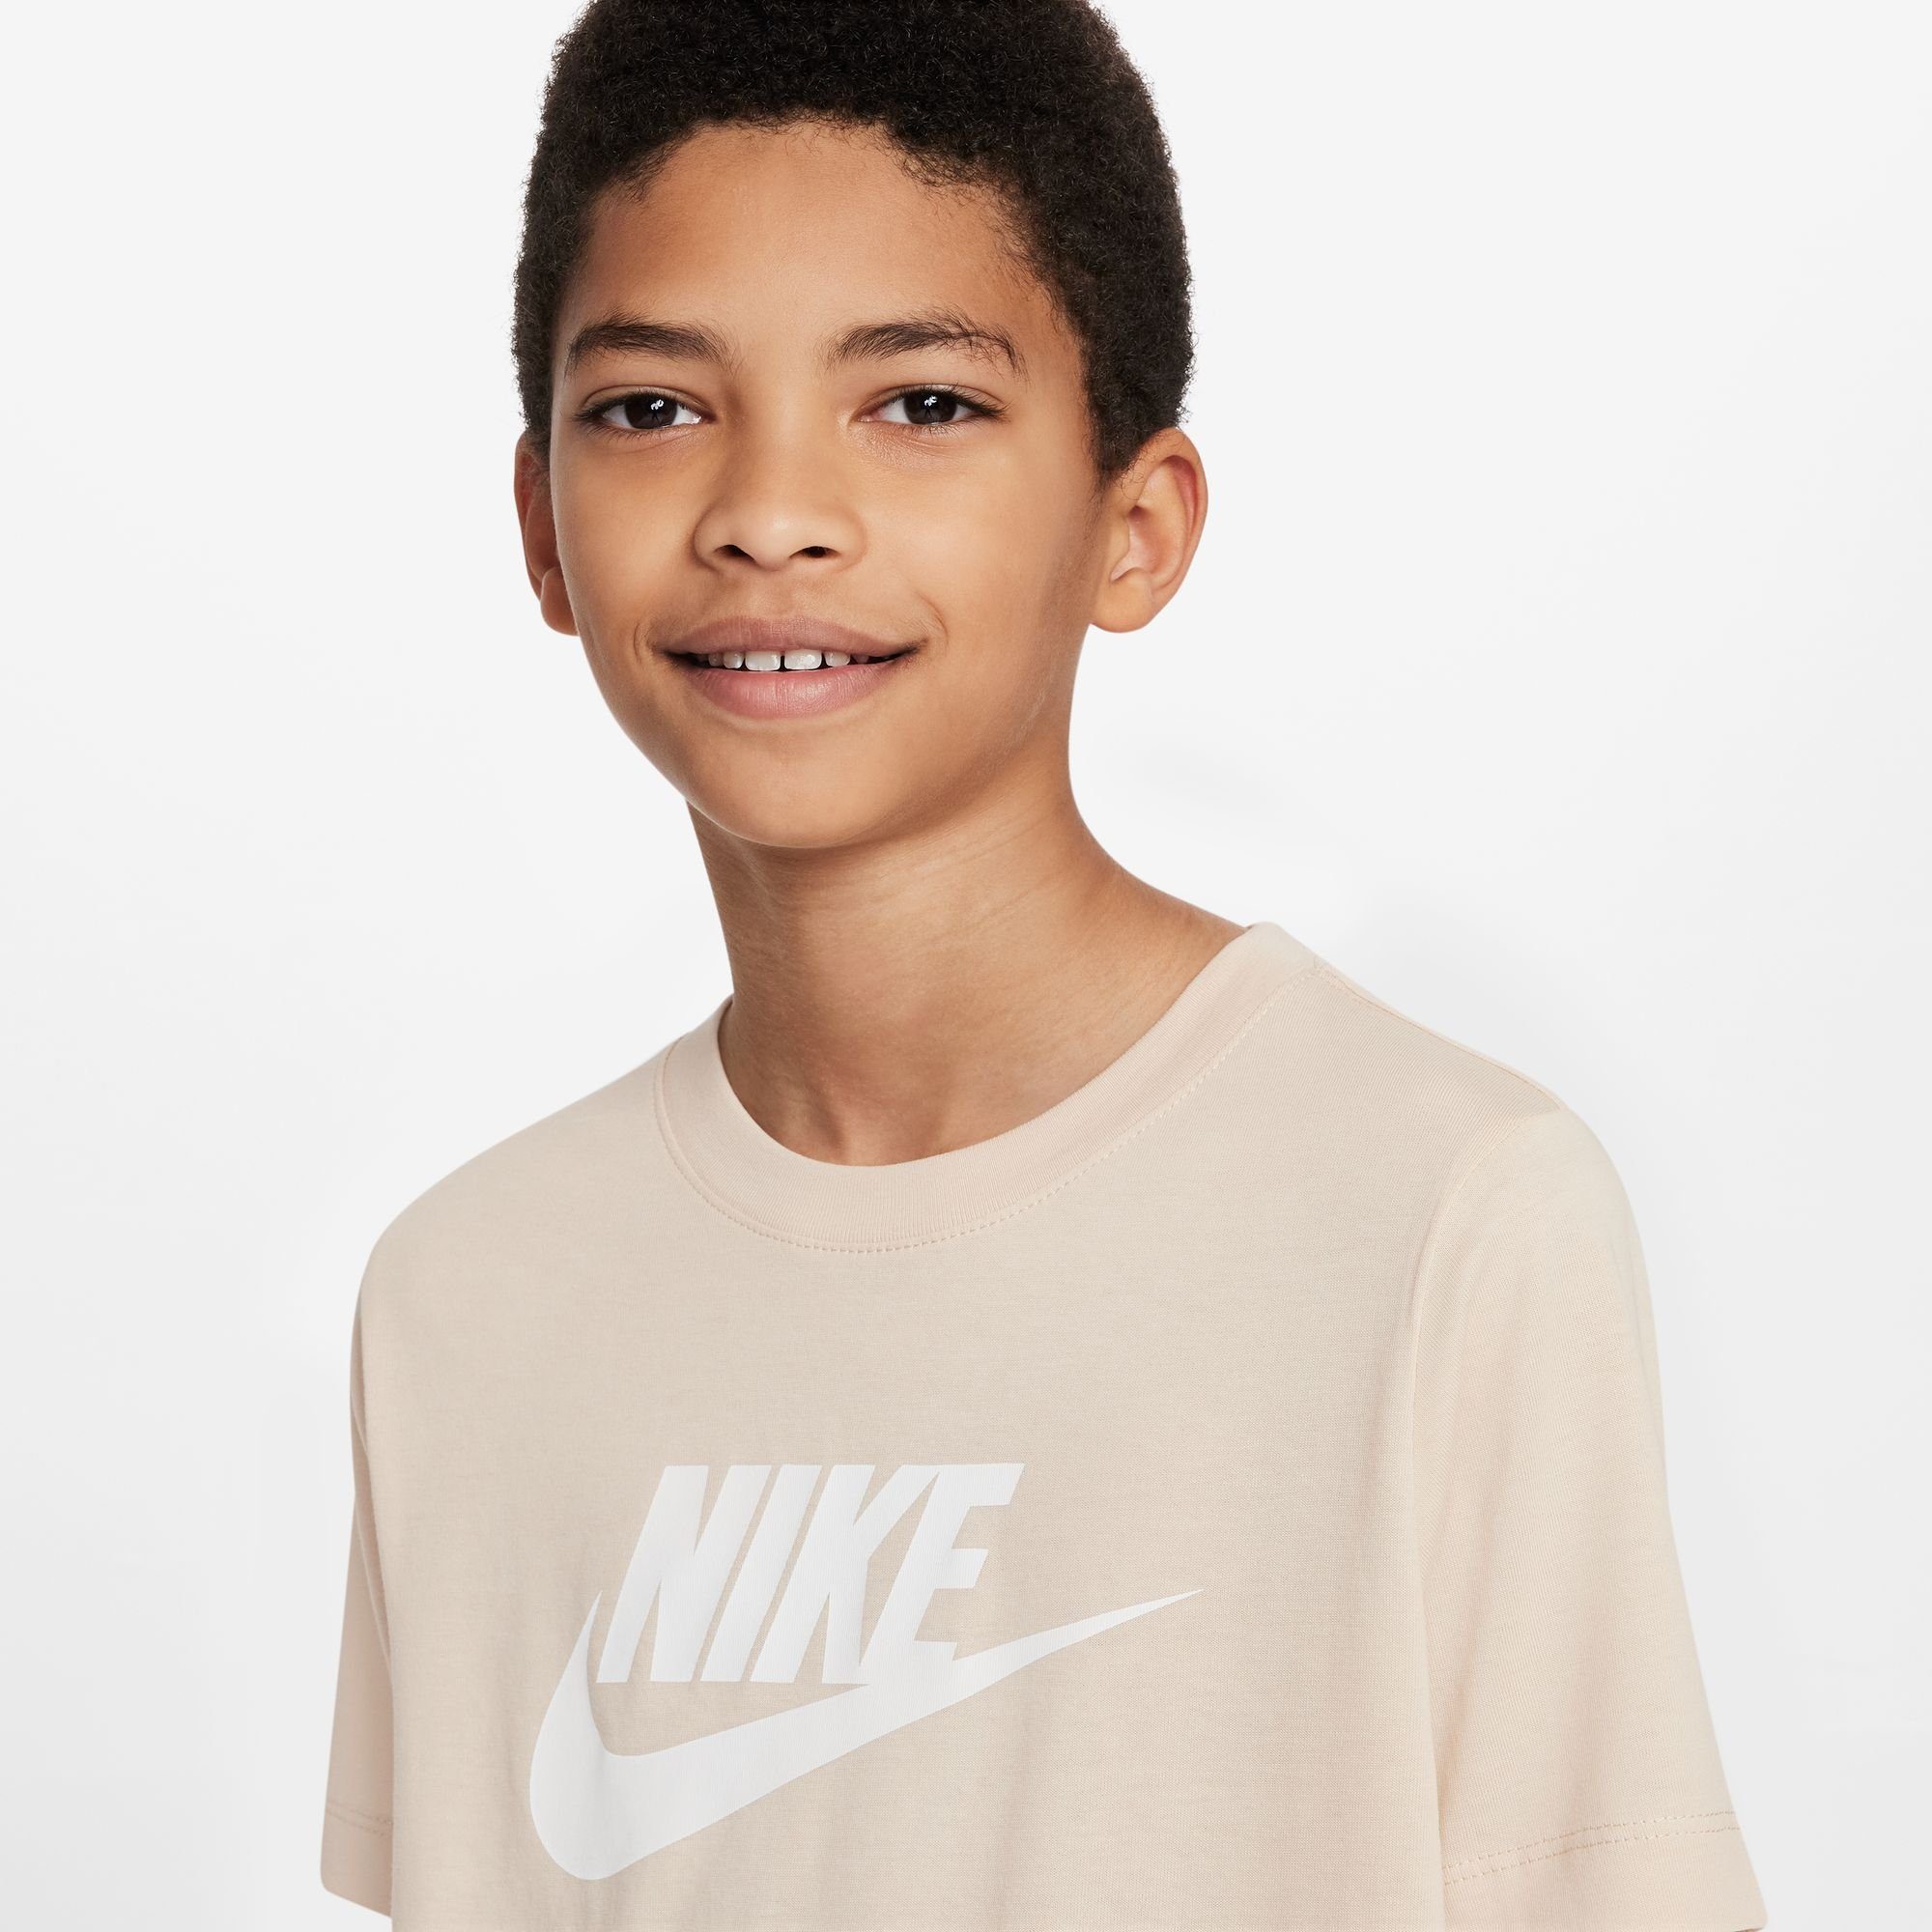 COTTON T-SHIRT KIDS' Nike T-Shirt Sportswear BIG SANDDRIFT